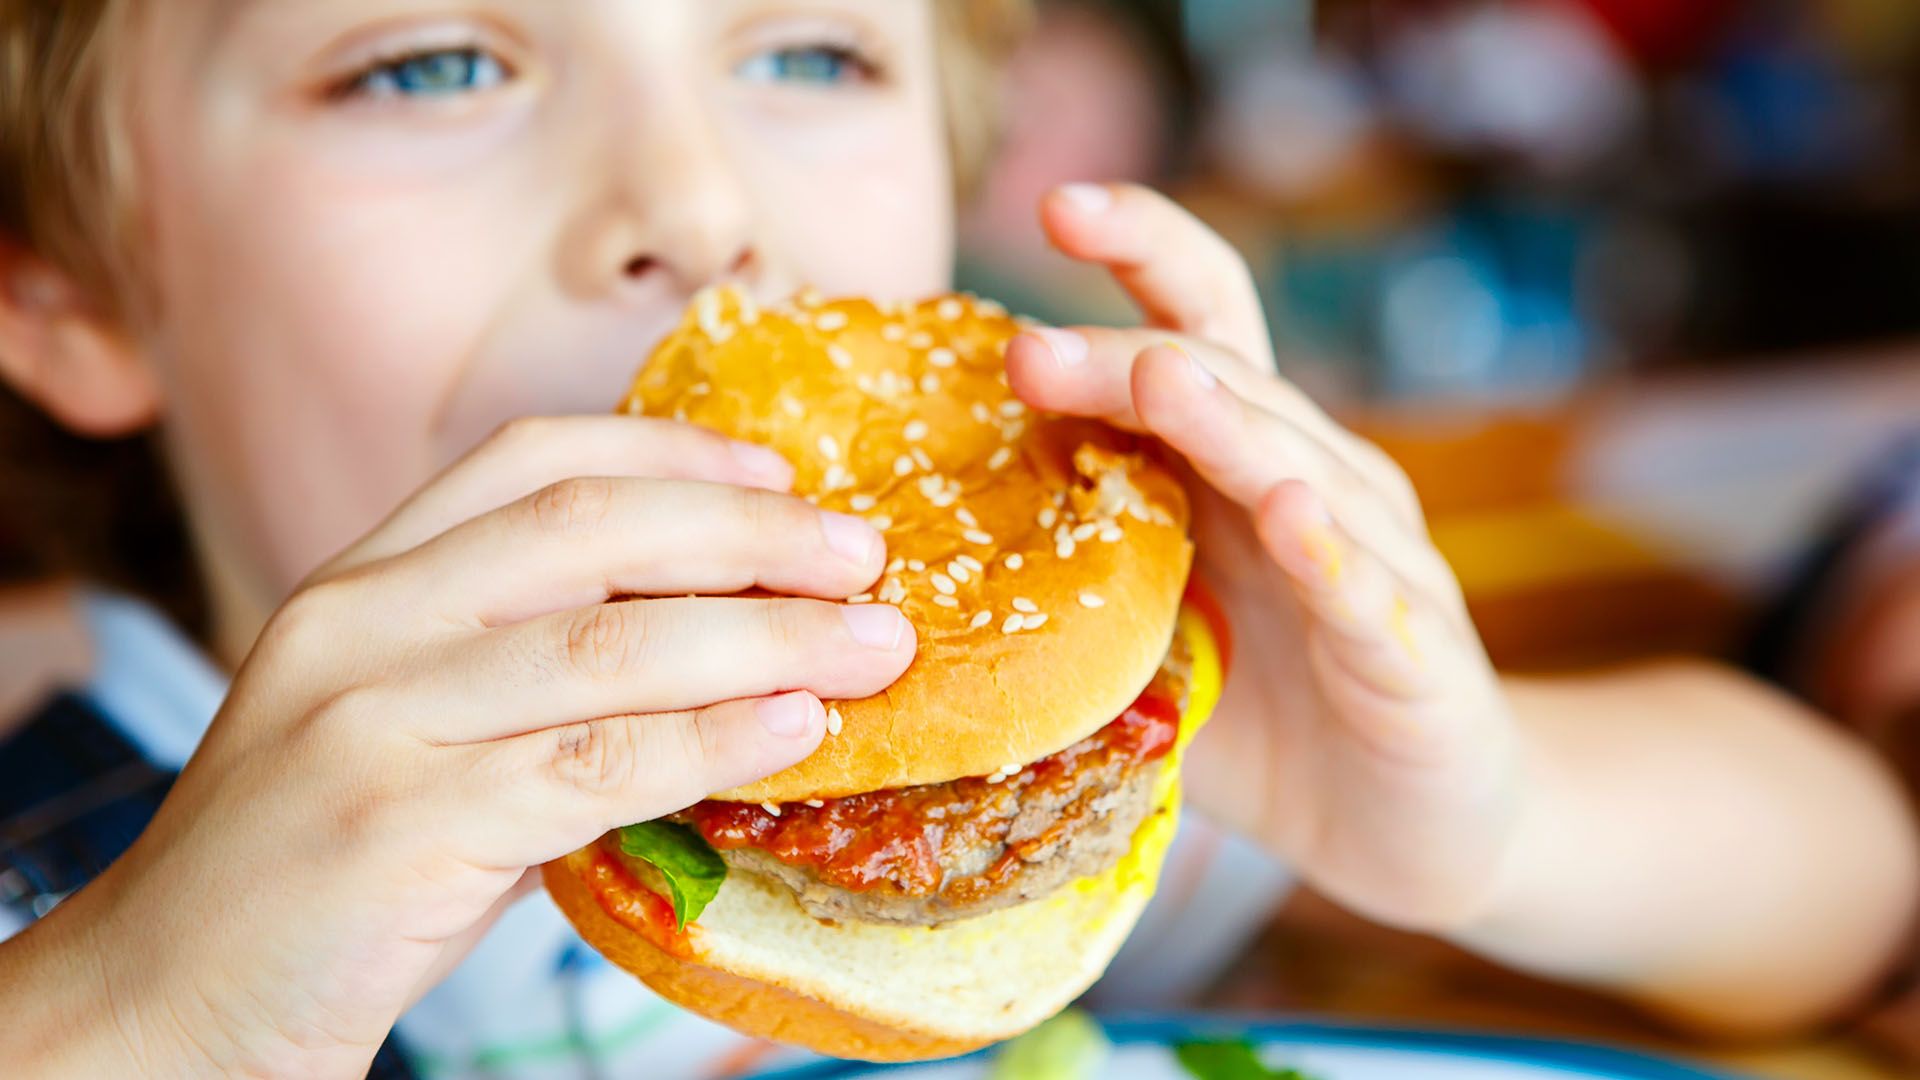 Nene comiendo hamburguesa - Síndrome urémico hemolítico